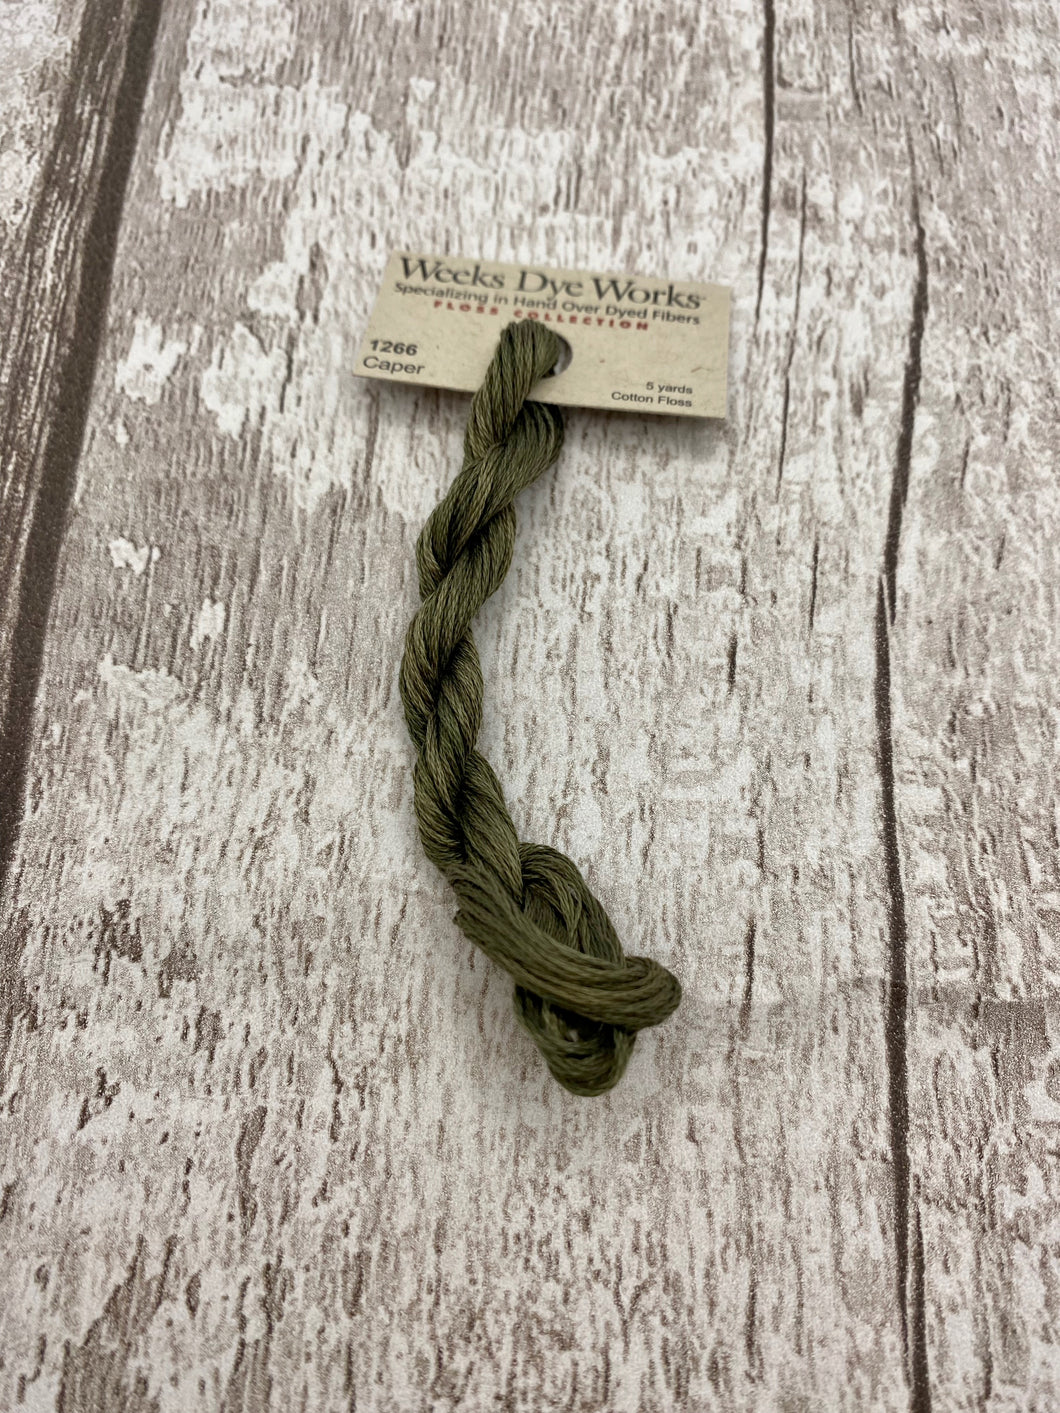 Caper (#1266) Weeks Dye Works 3-strand cotton floss